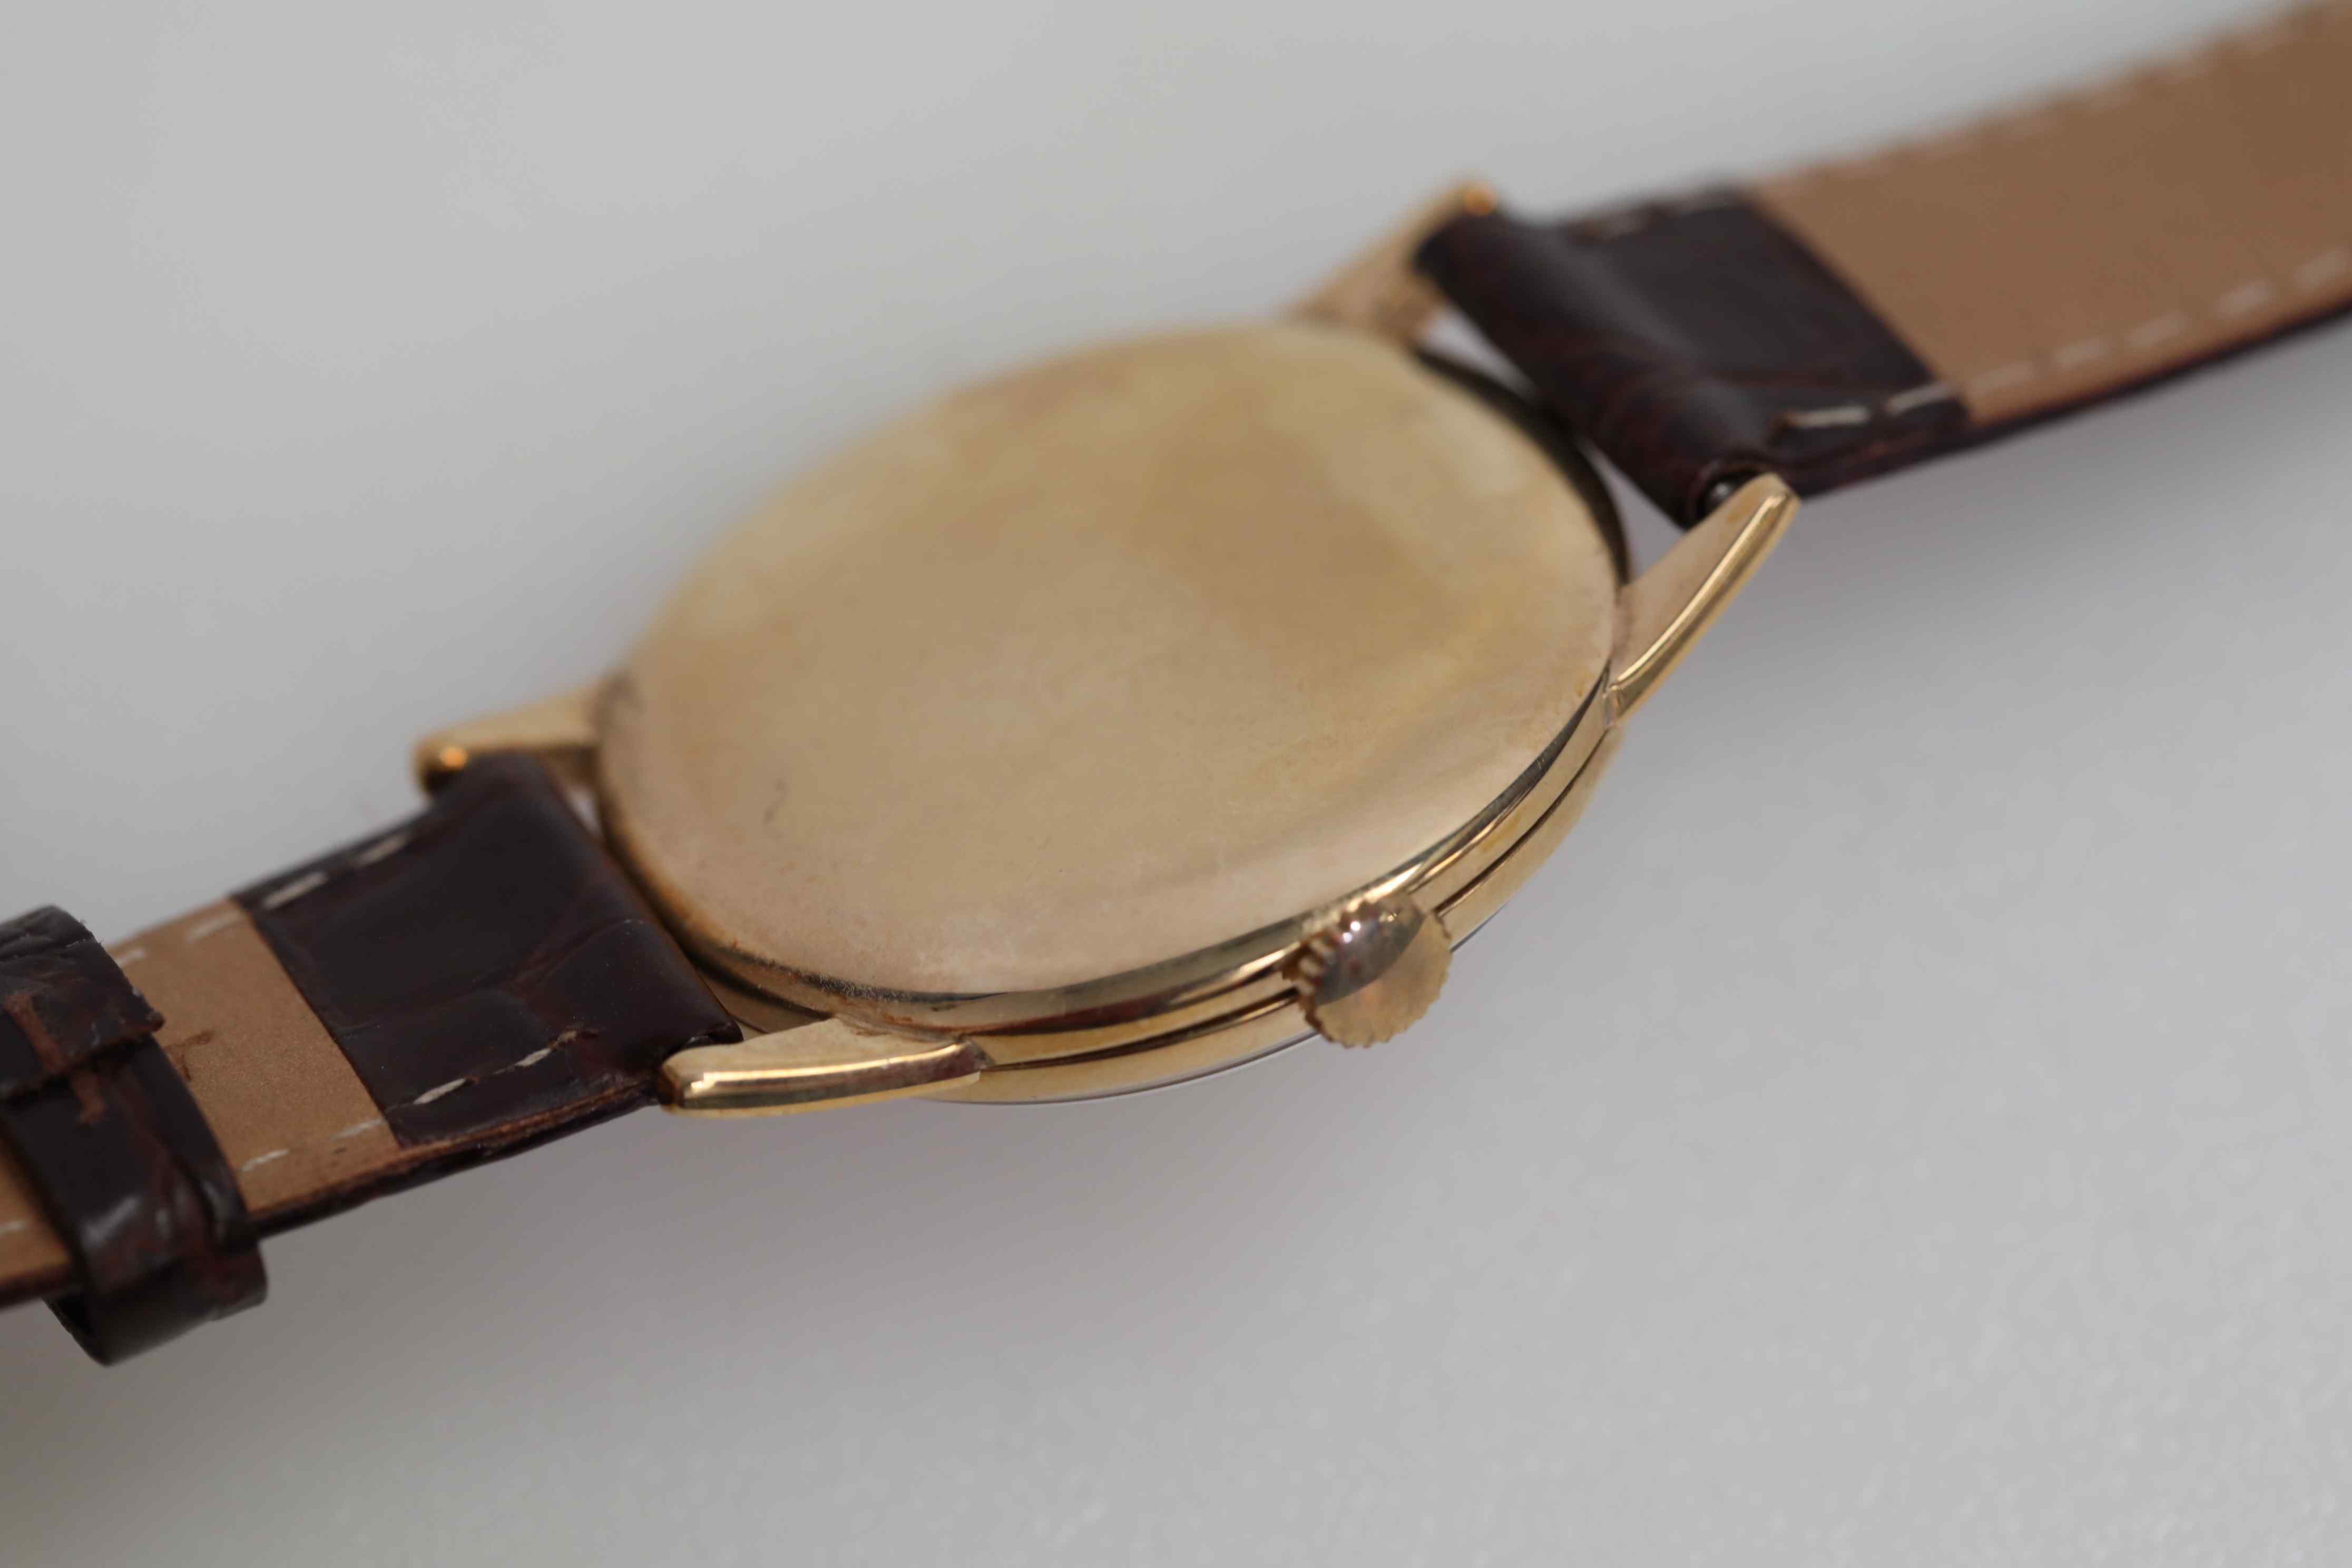 9CT Gold Rolex Watch Tudor 1968 - Image 7 of 8